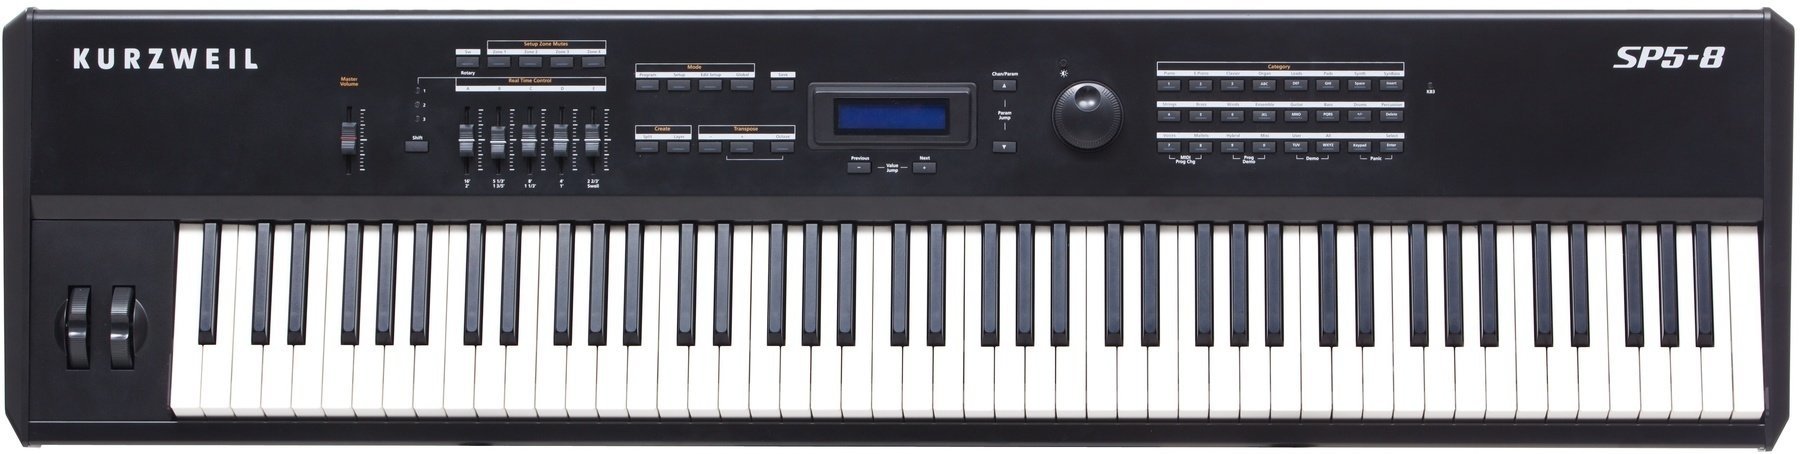 Digitalt scen piano Kurzweil SP5-8